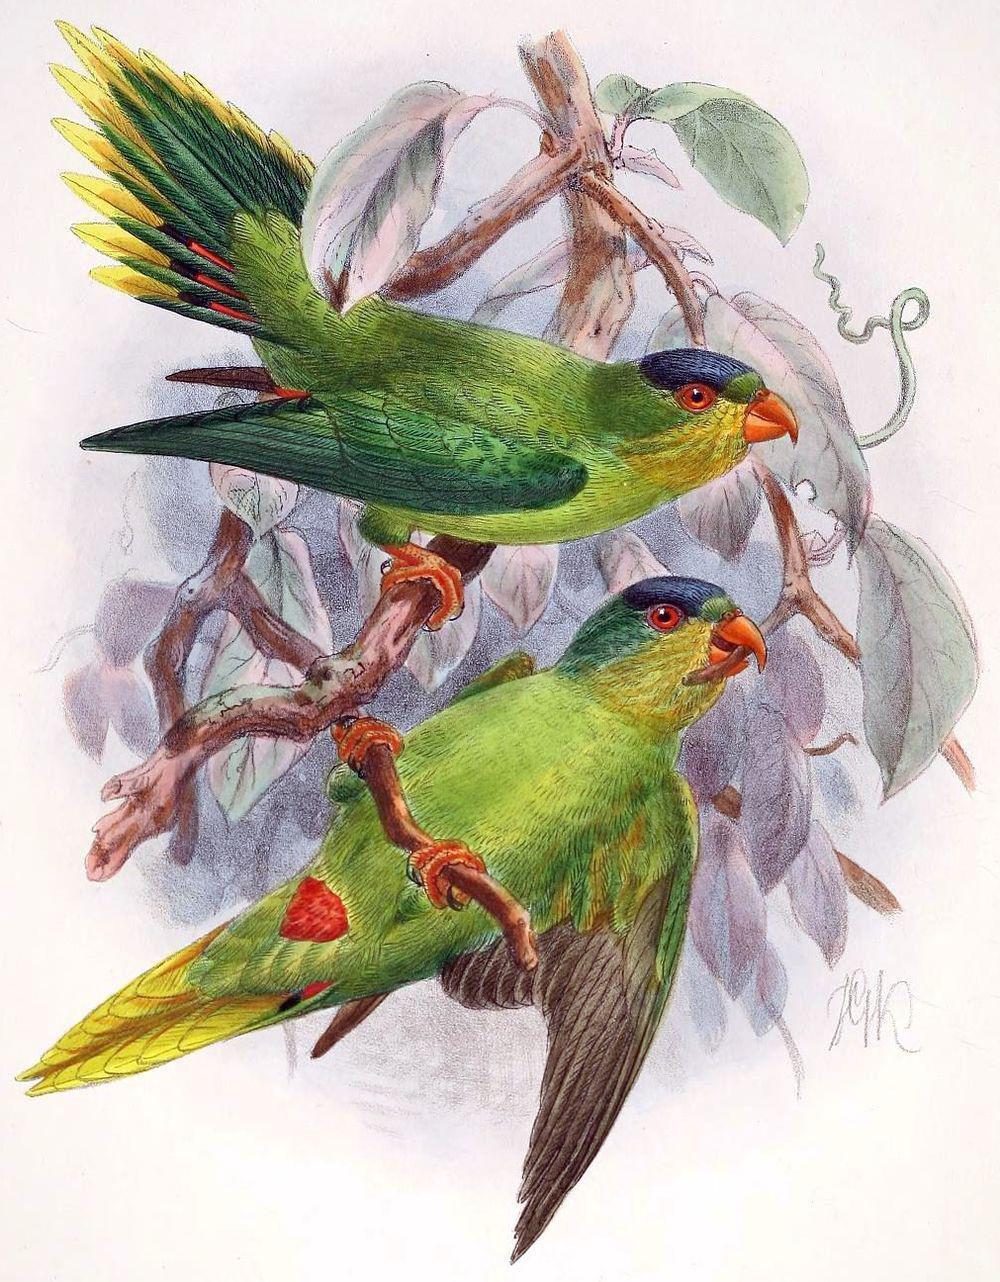 新喀鹦鹉 / New Caledonian Lorikeet / Charmosyna diadema